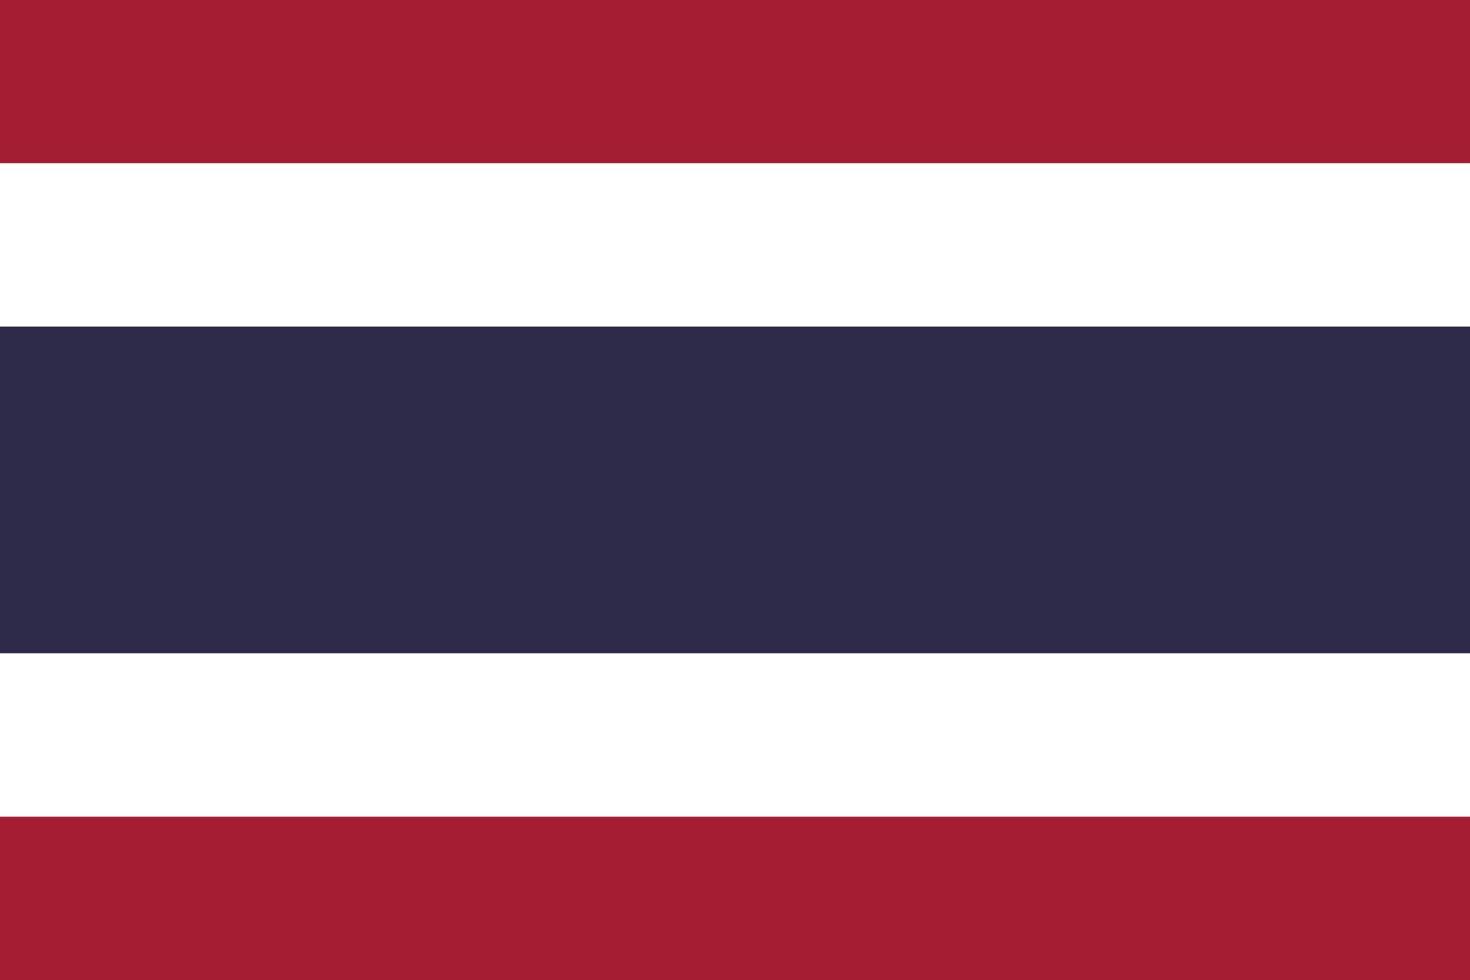 The National flag of Thailand. Thailand flag vector illustration